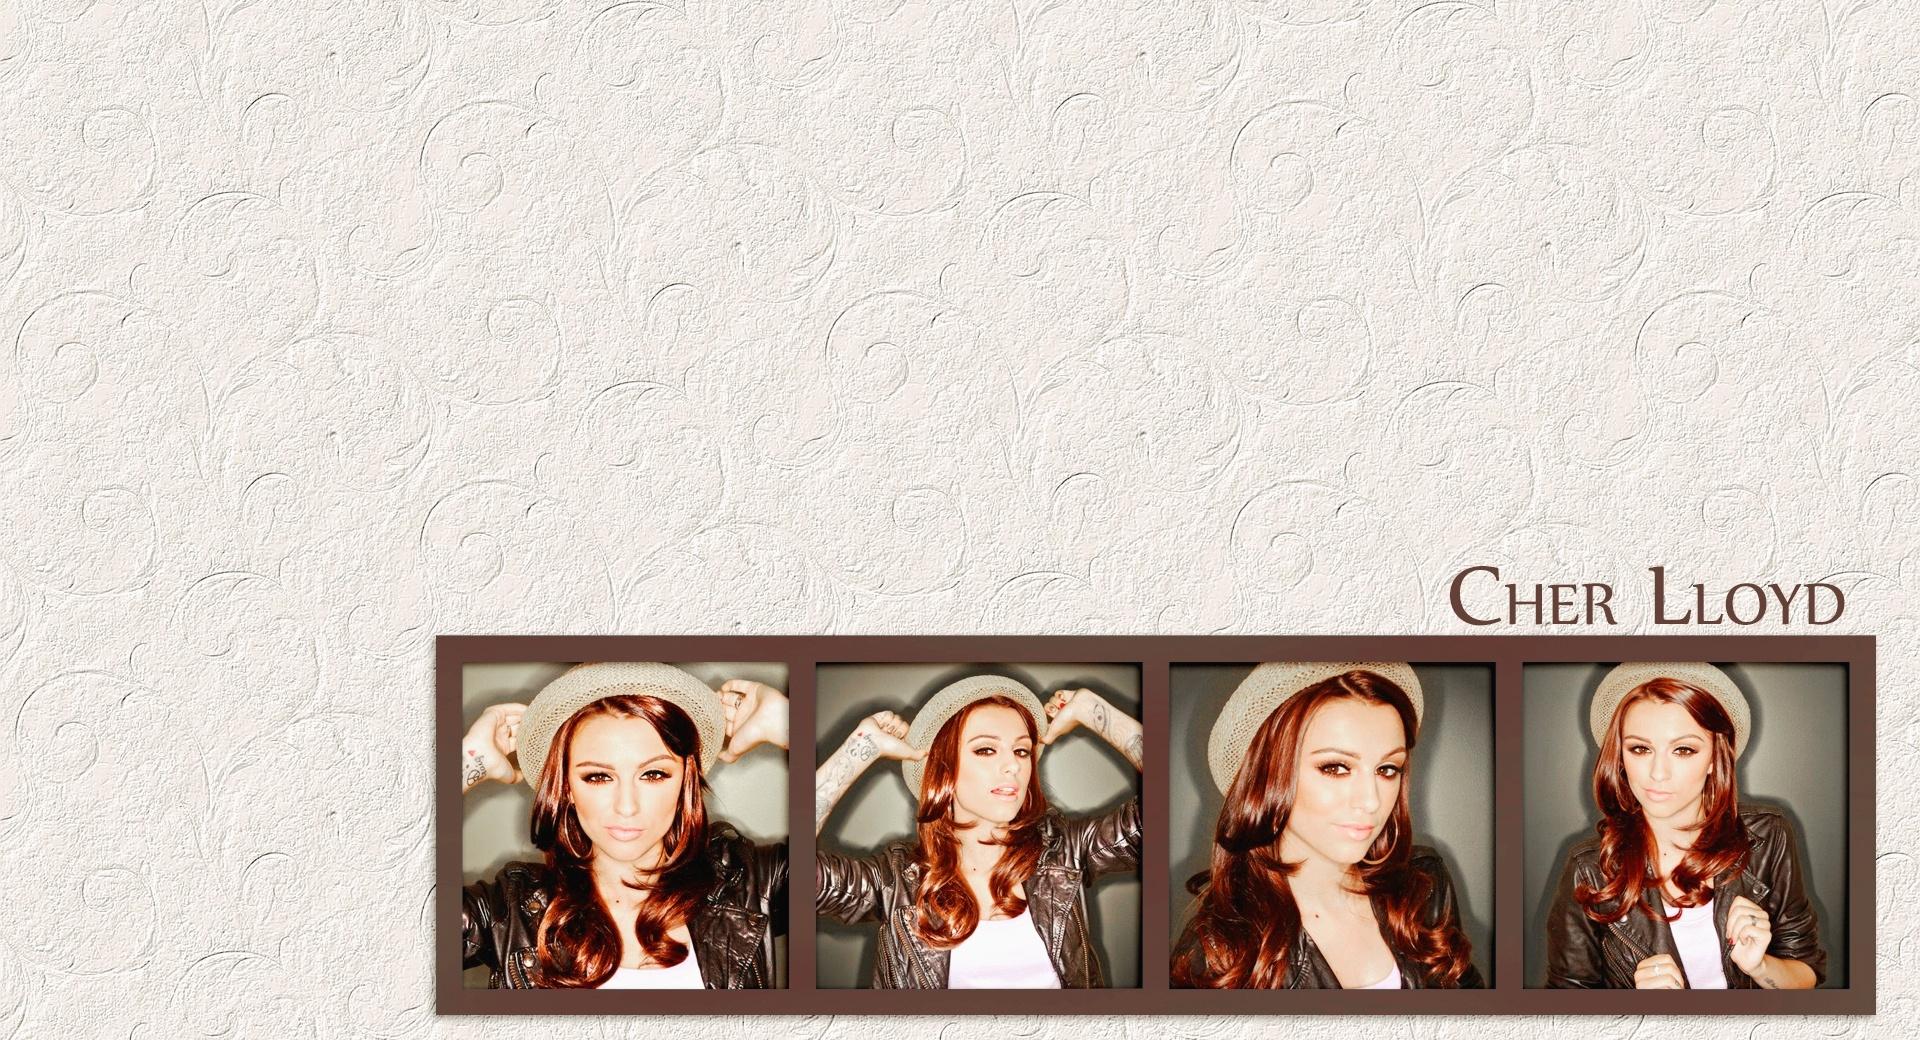 Cher Lloyd at 1024 x 1024 iPad size wallpapers HD quality